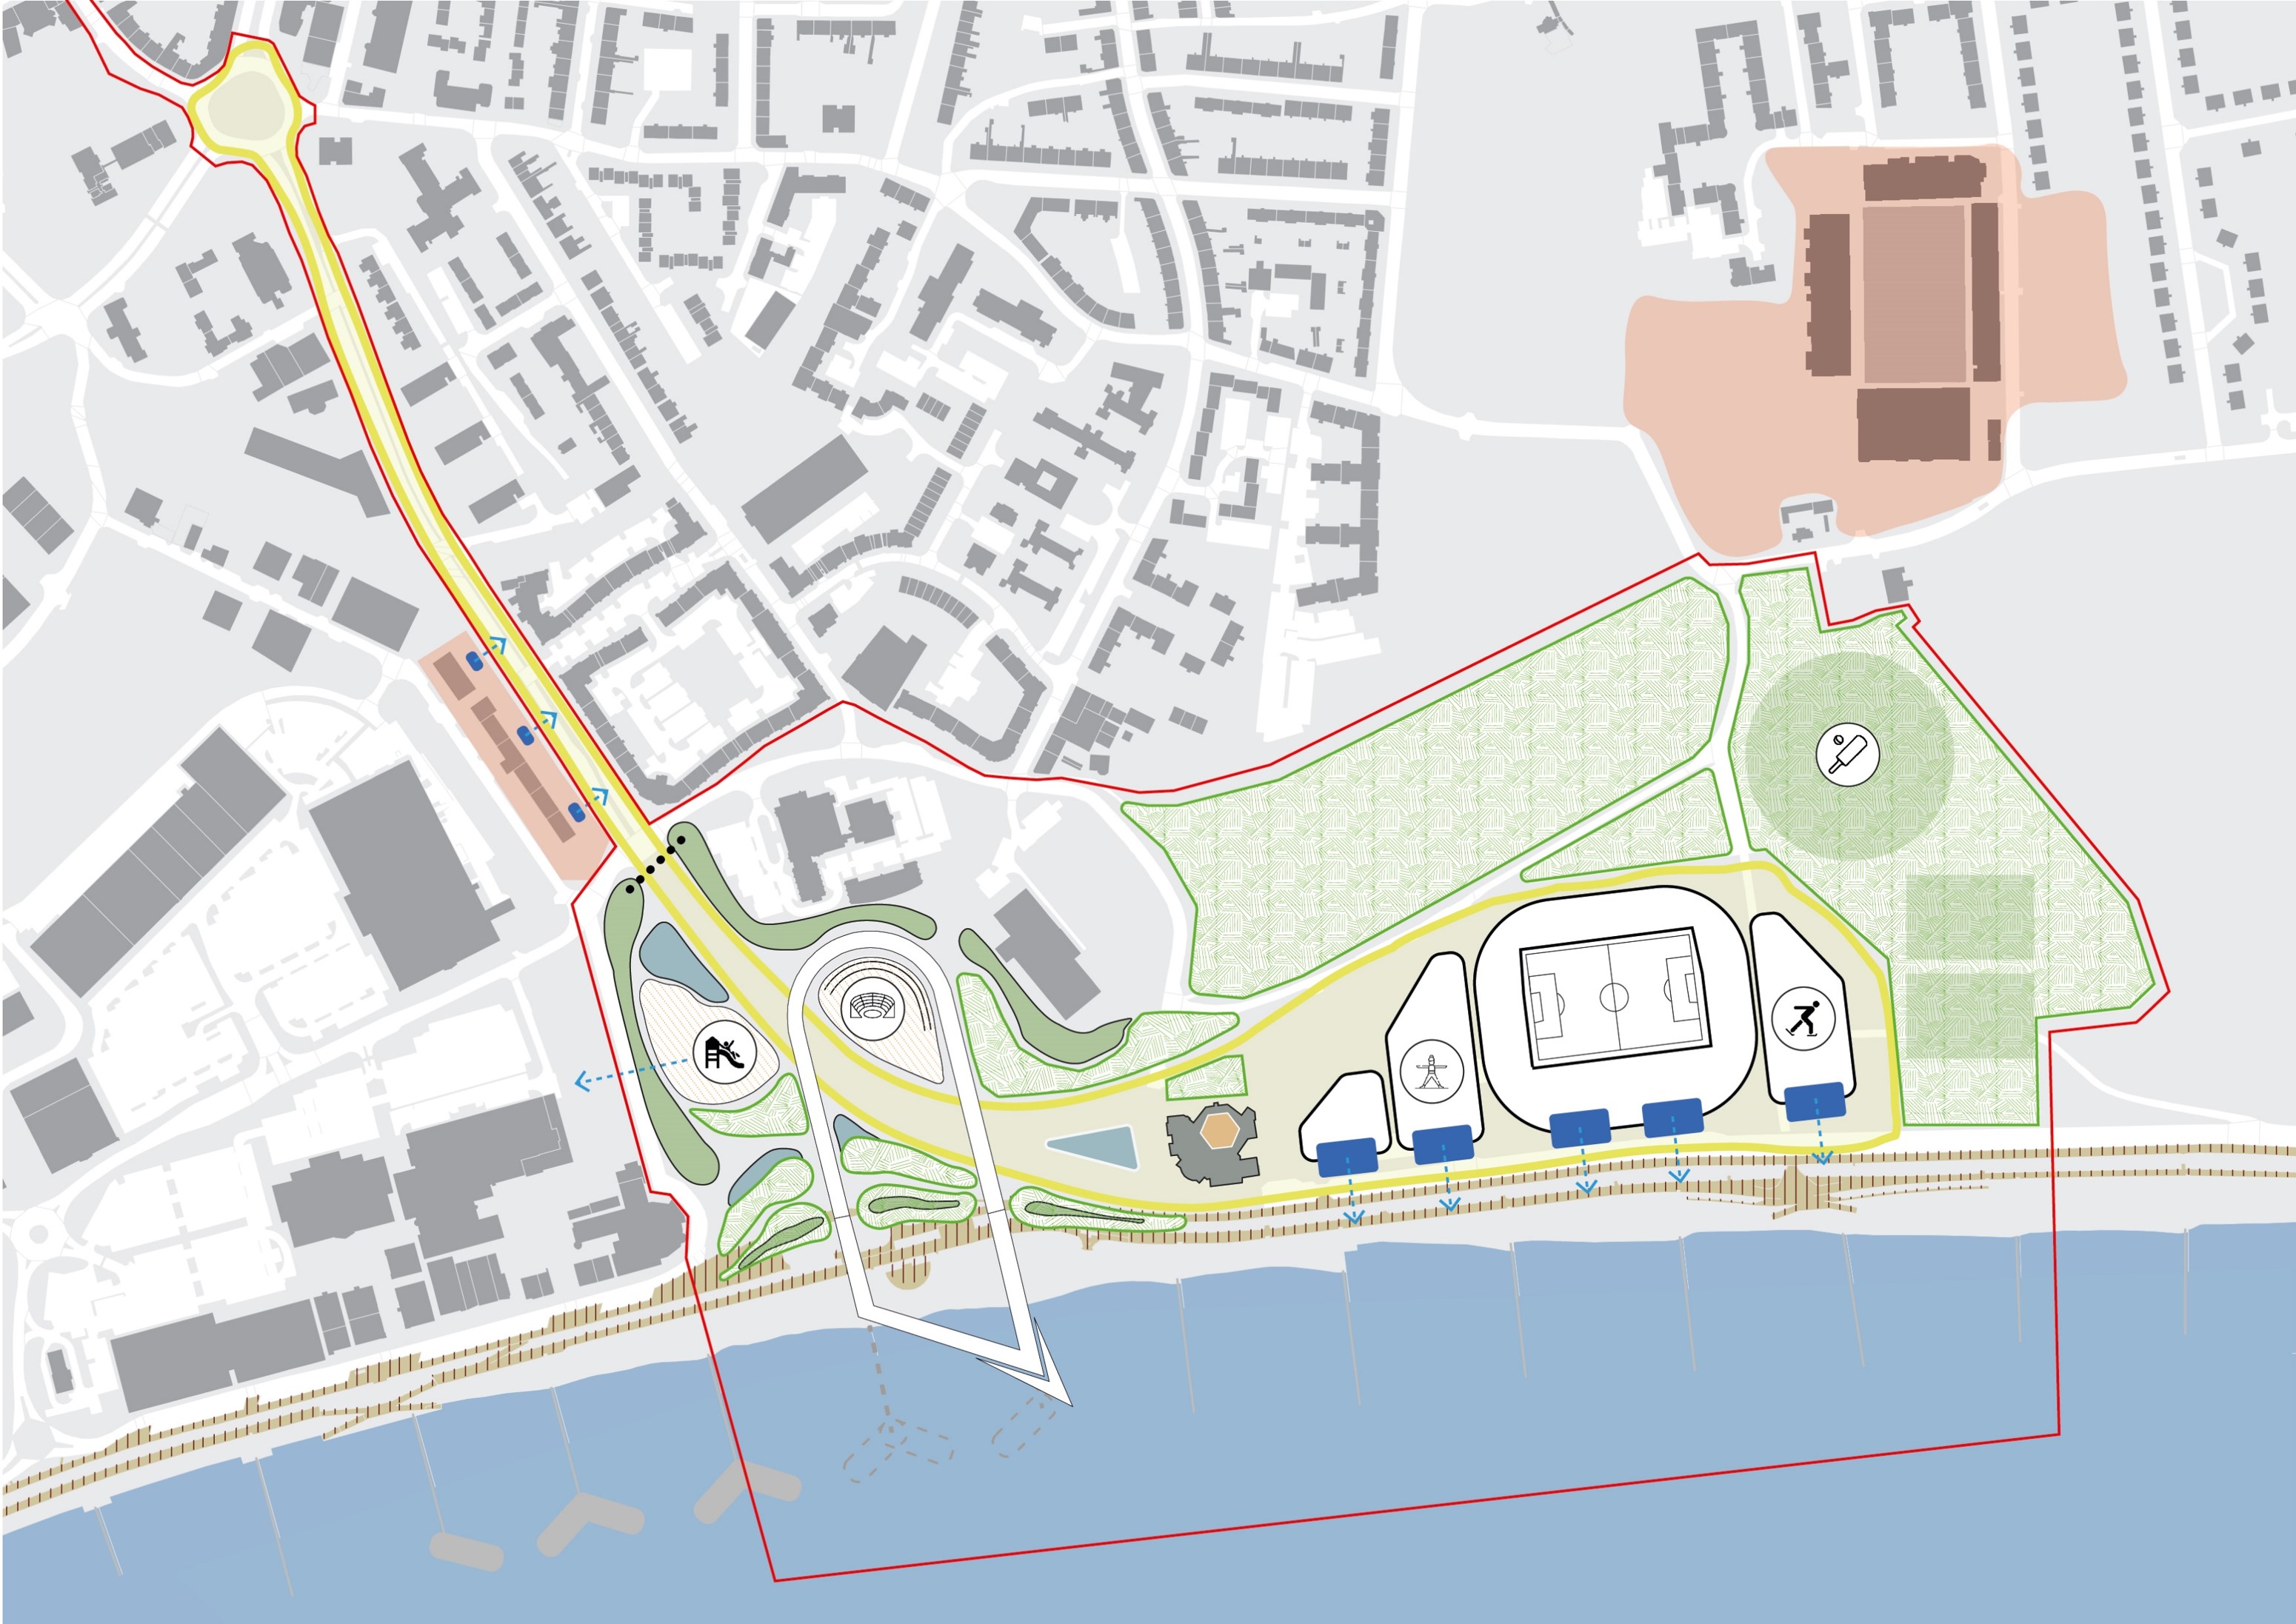 Aberdeen beach masterplan moves to detailed design stage